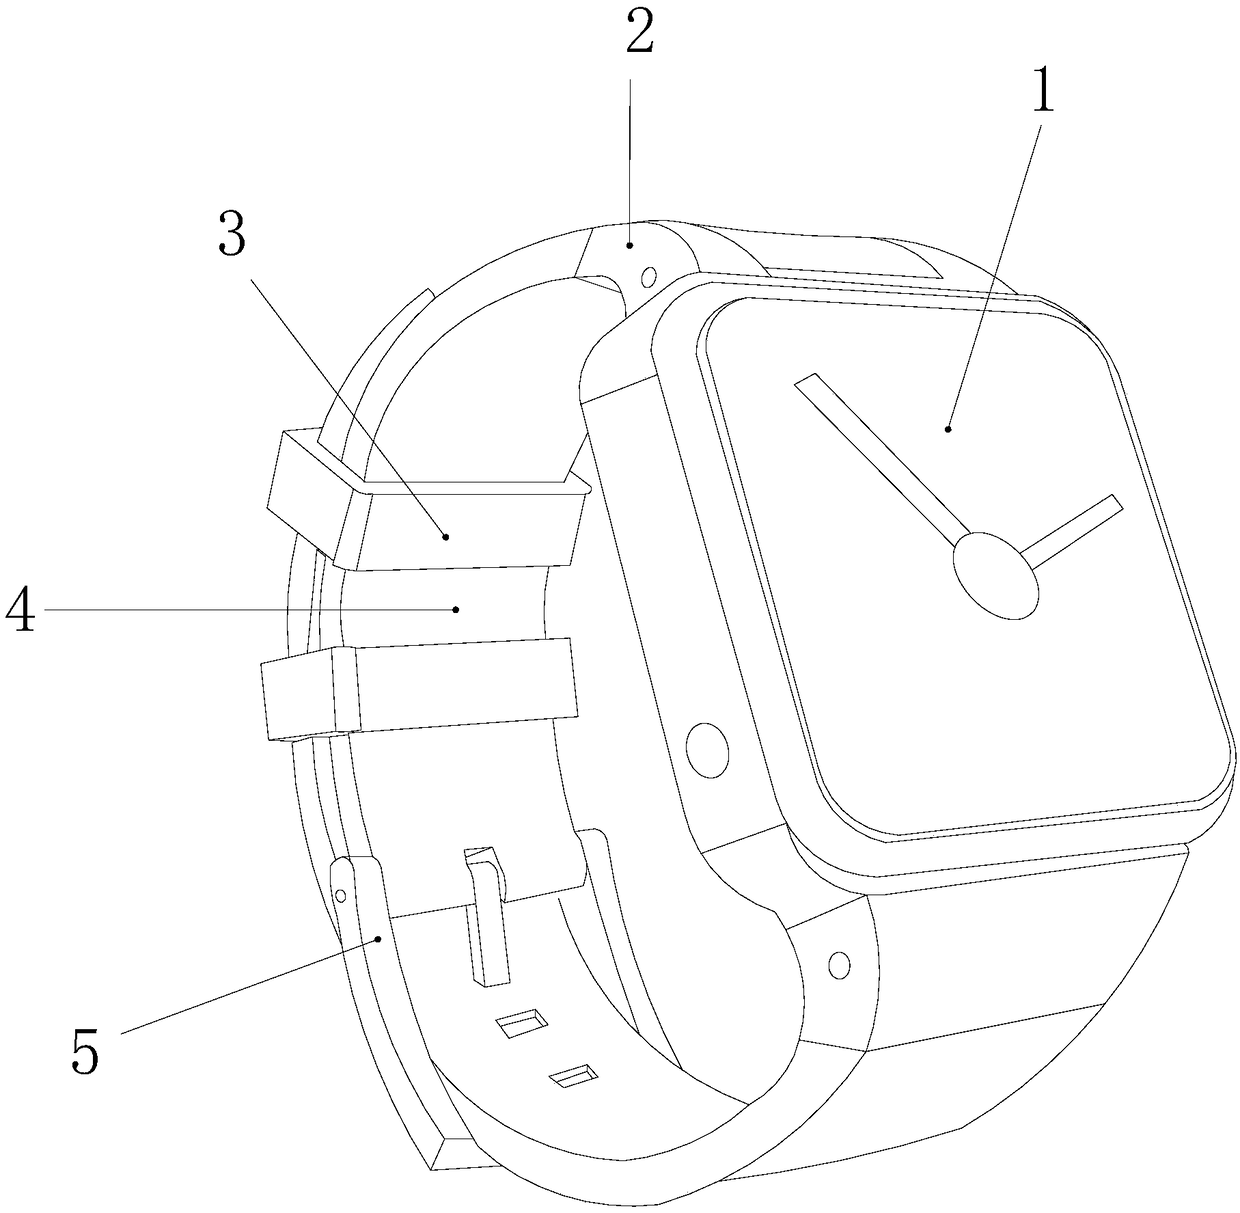 Display mechanism of mechanical watch